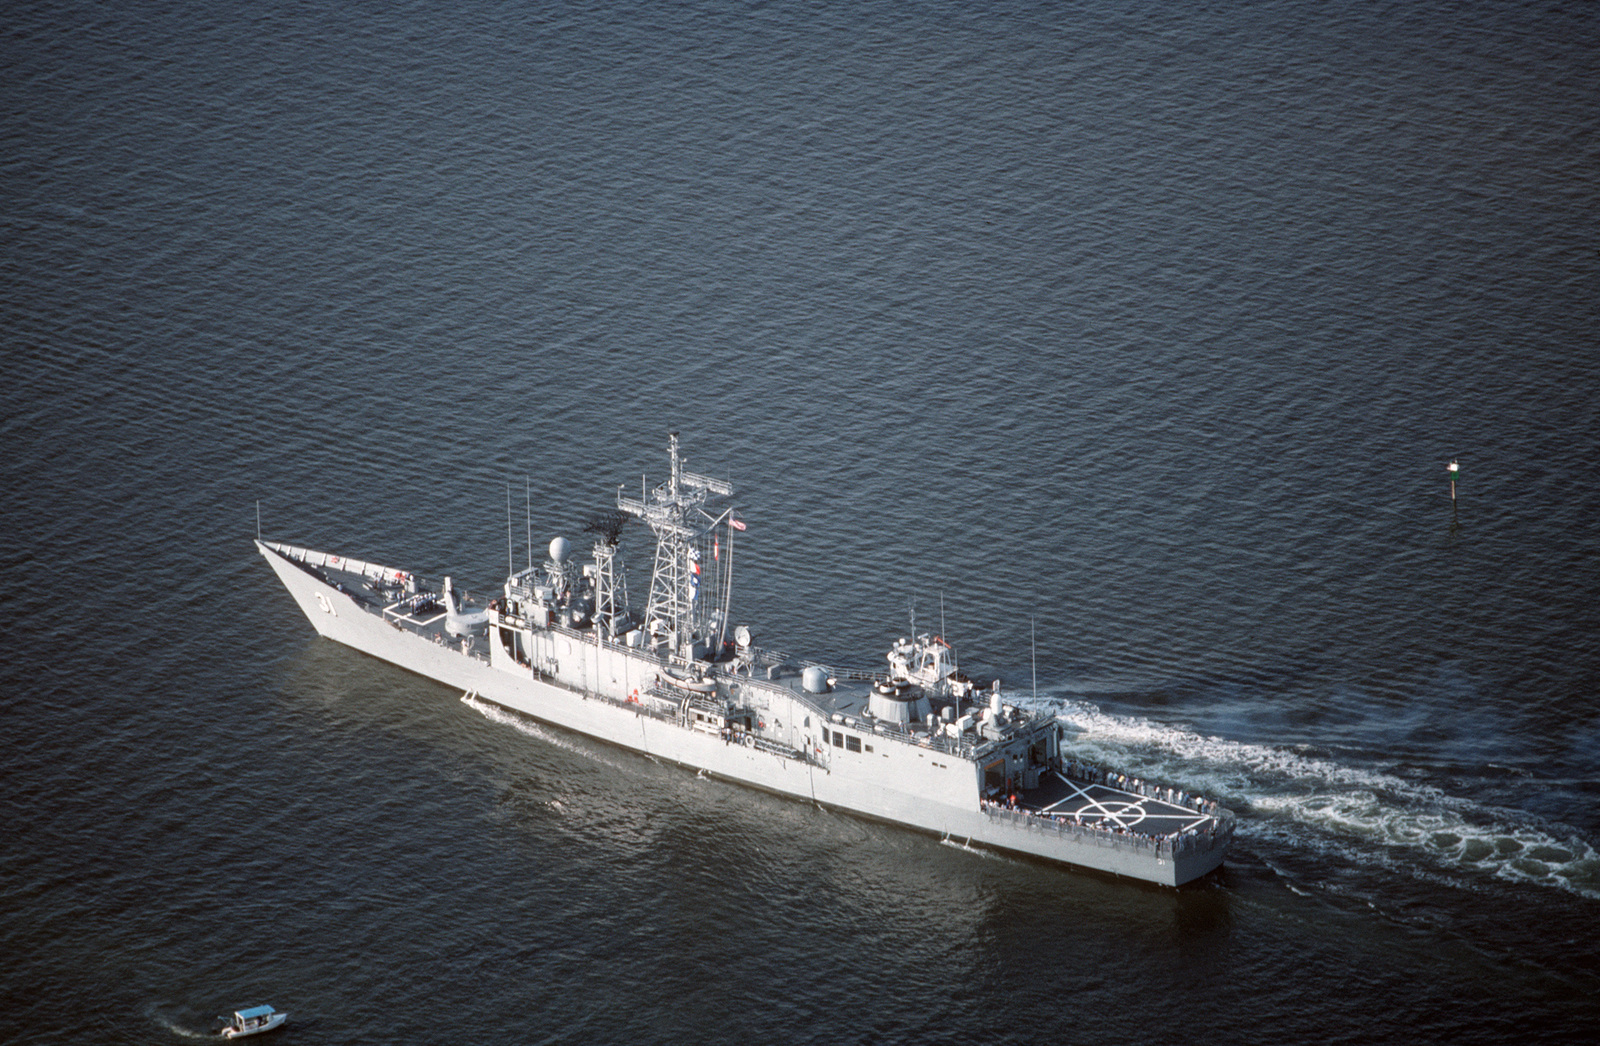 Uss stark. USS Stark (FFG-31).